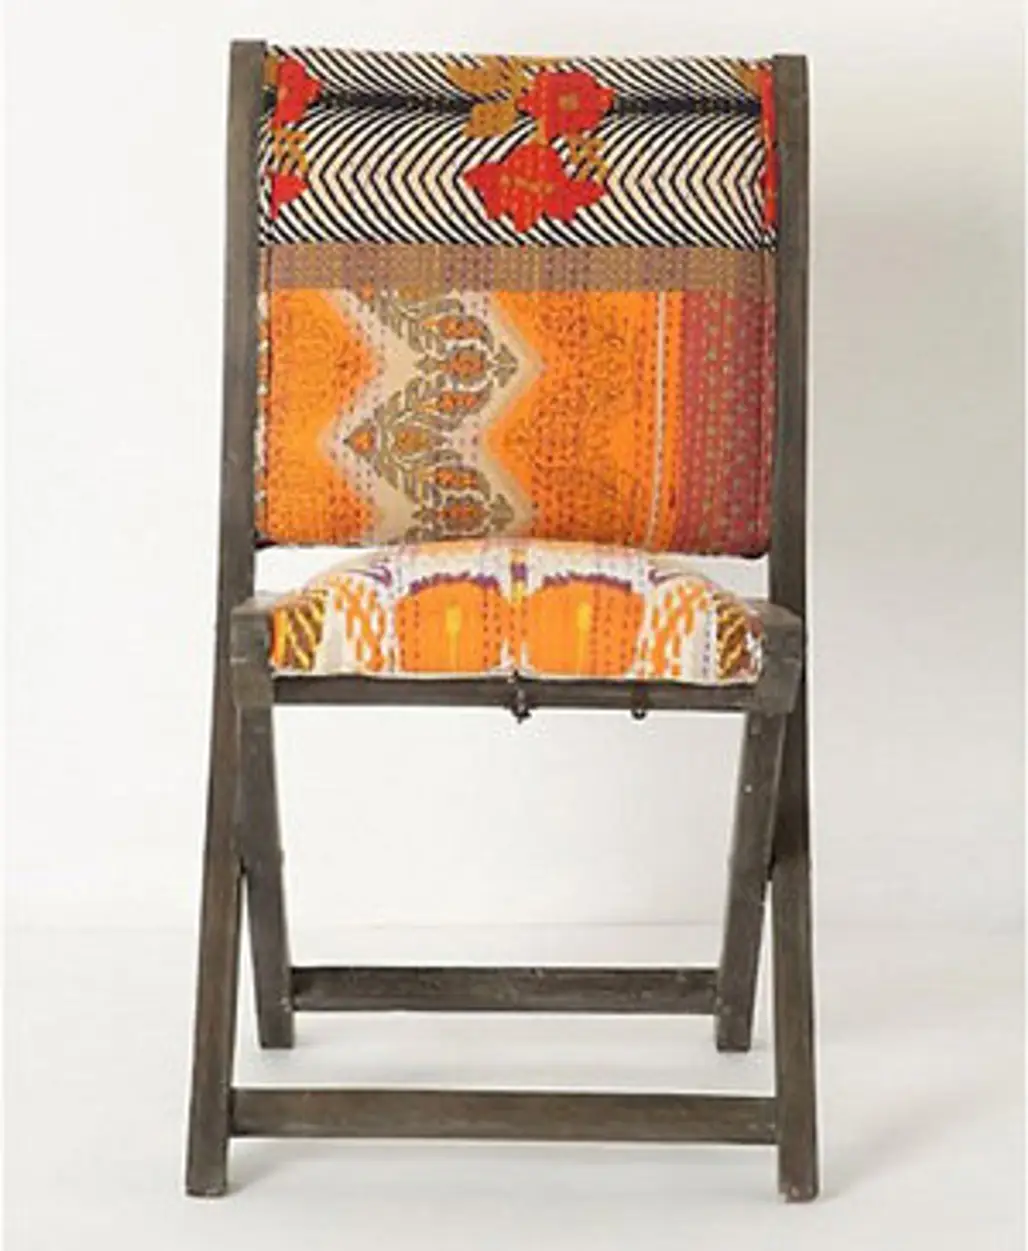 Terai Folding Chair, Orange Ikat